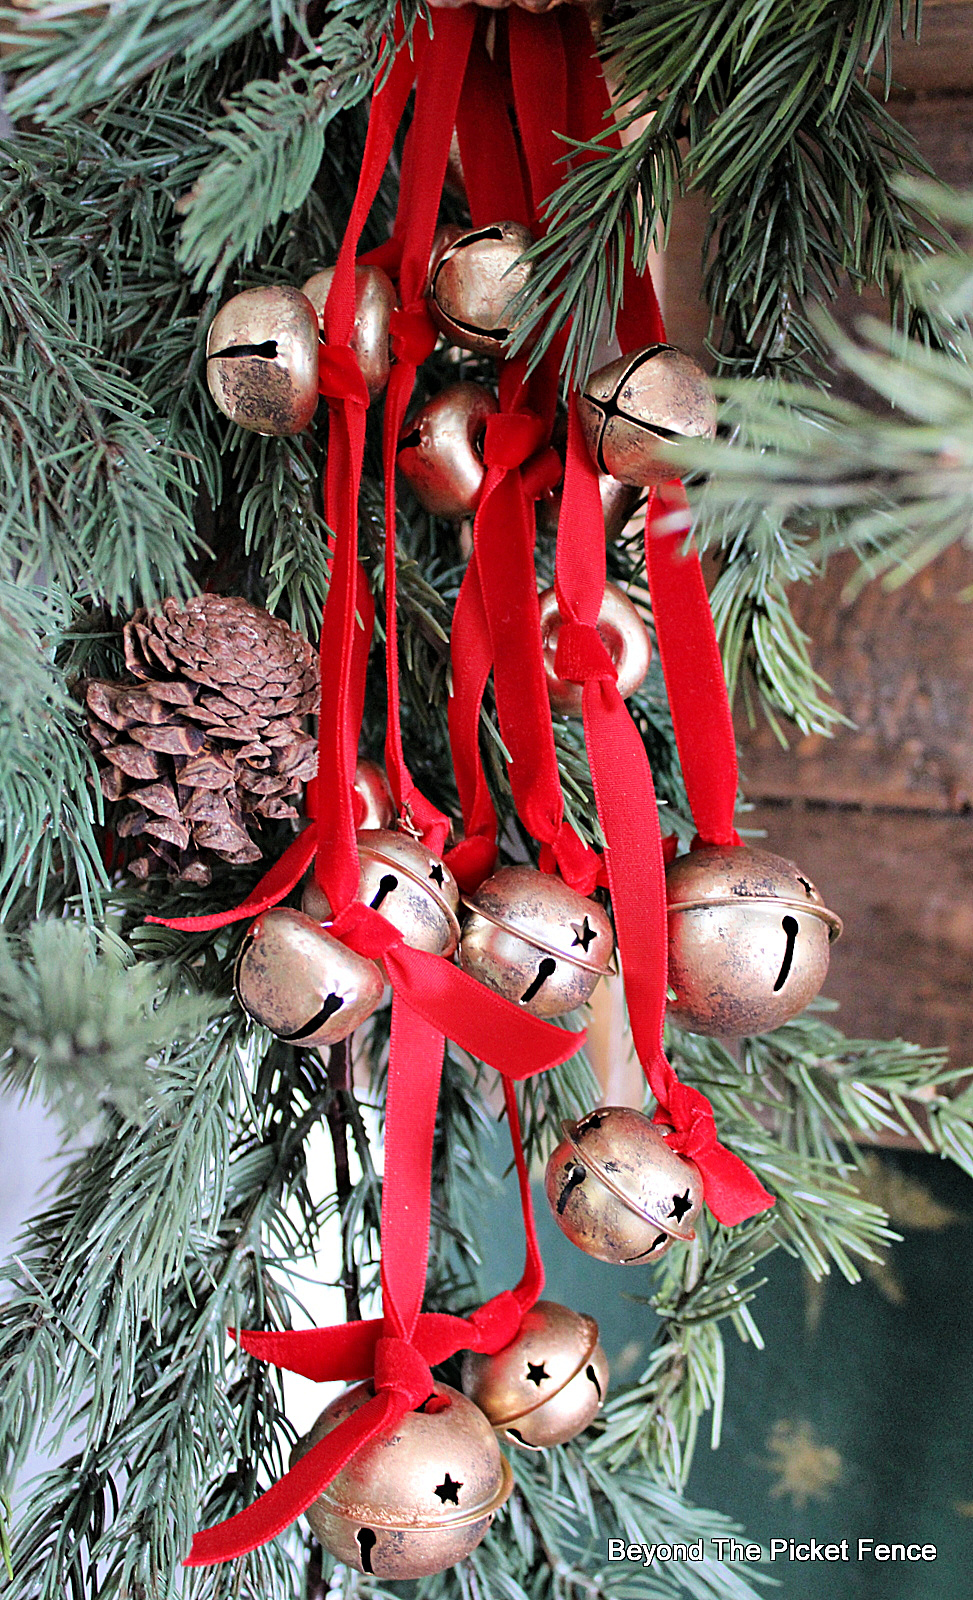 Antiquing Christmas Bells with Rub N Buff 